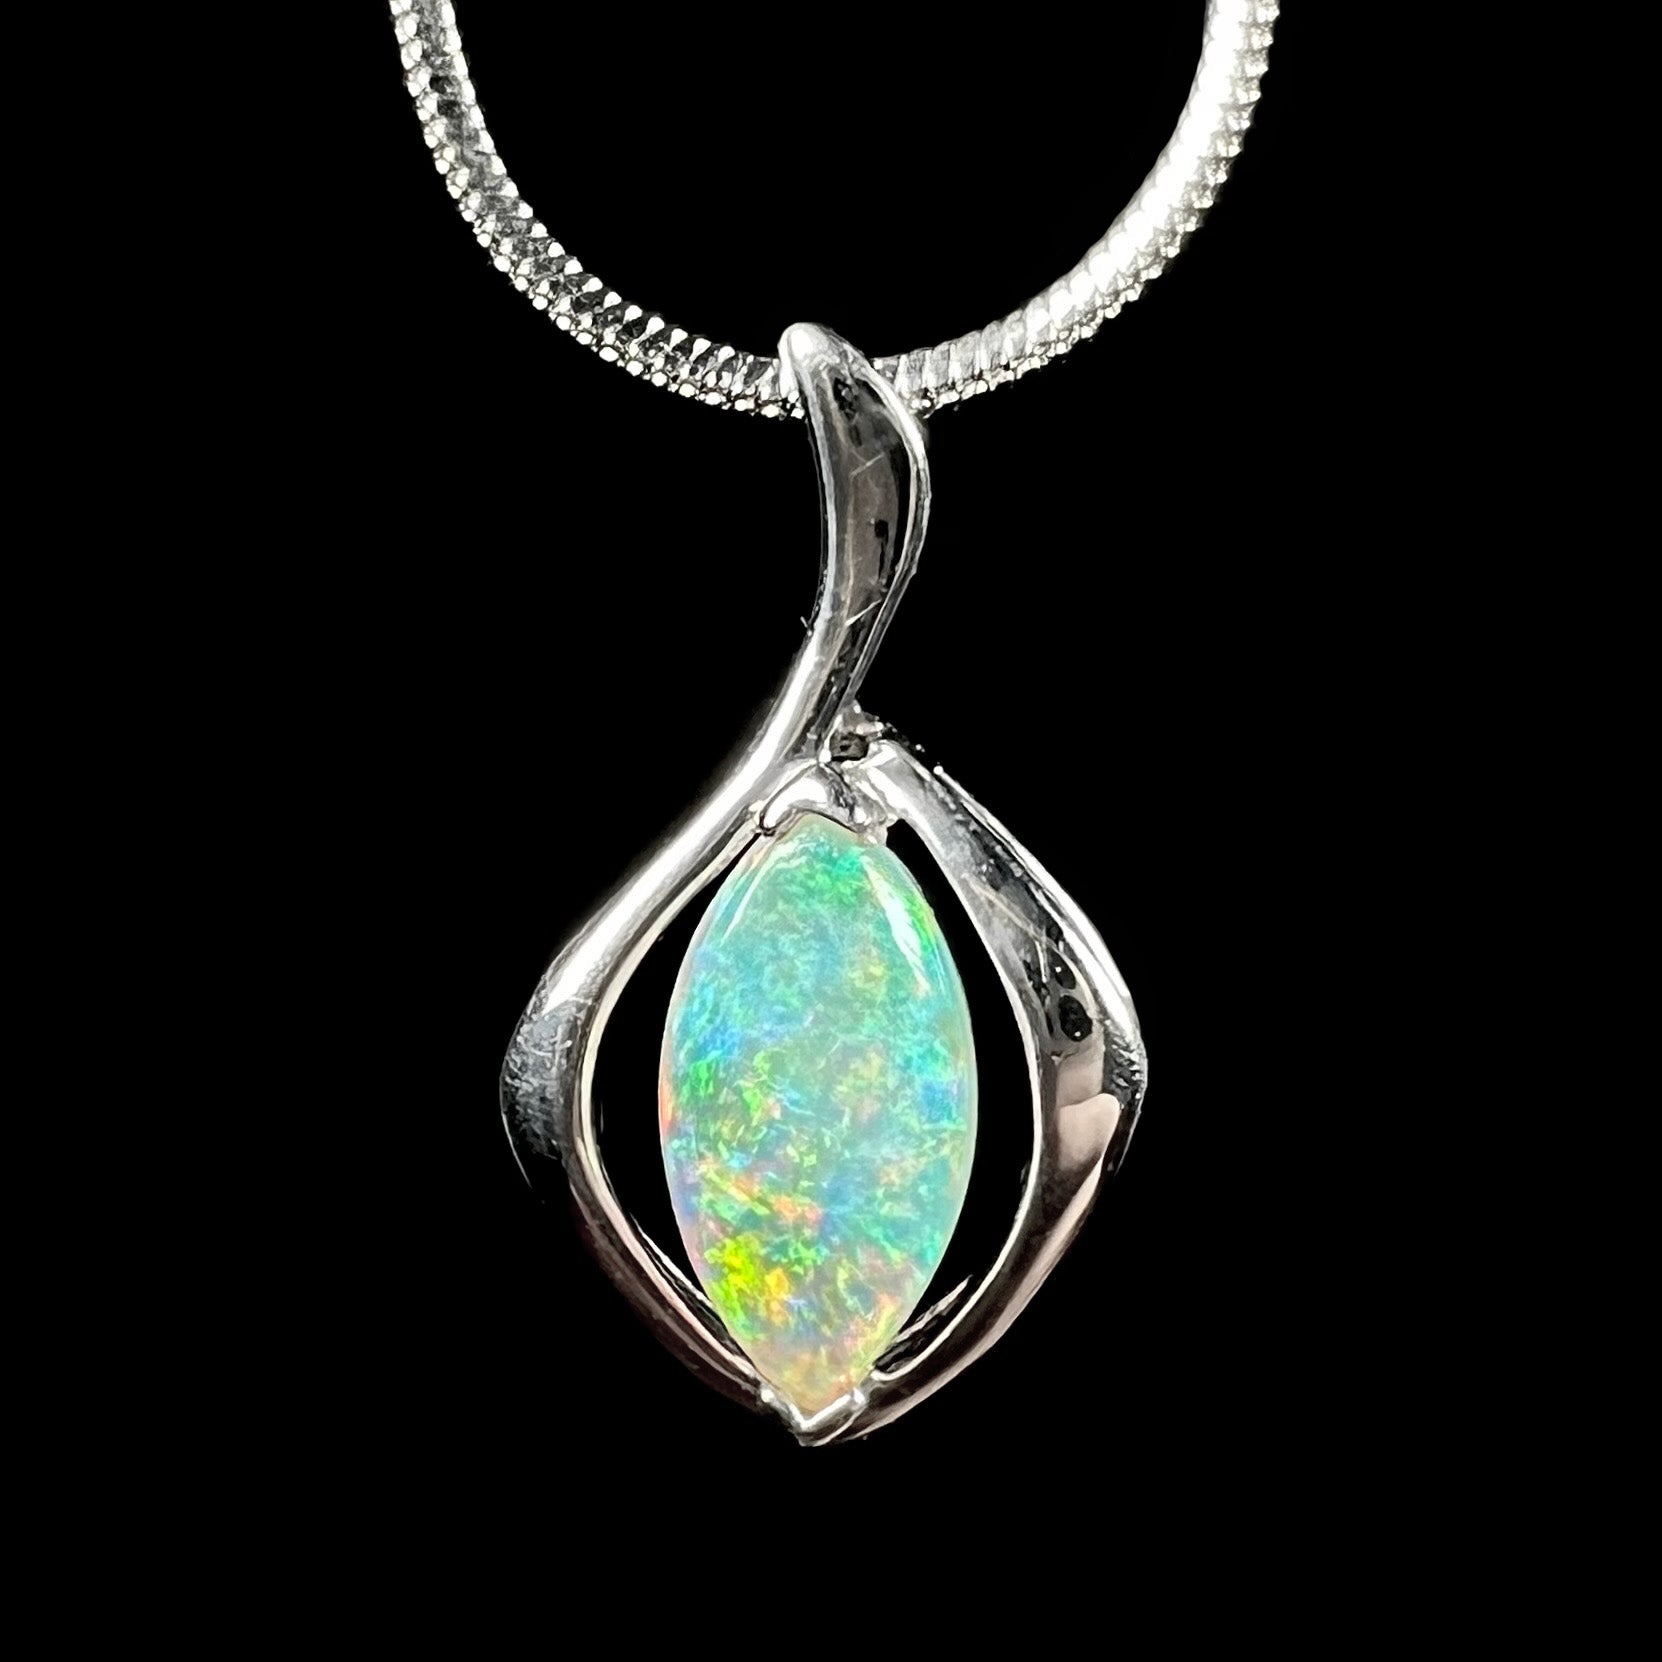 Shop Handmade, Natural, & Estate Opal Jewelry | Burton's